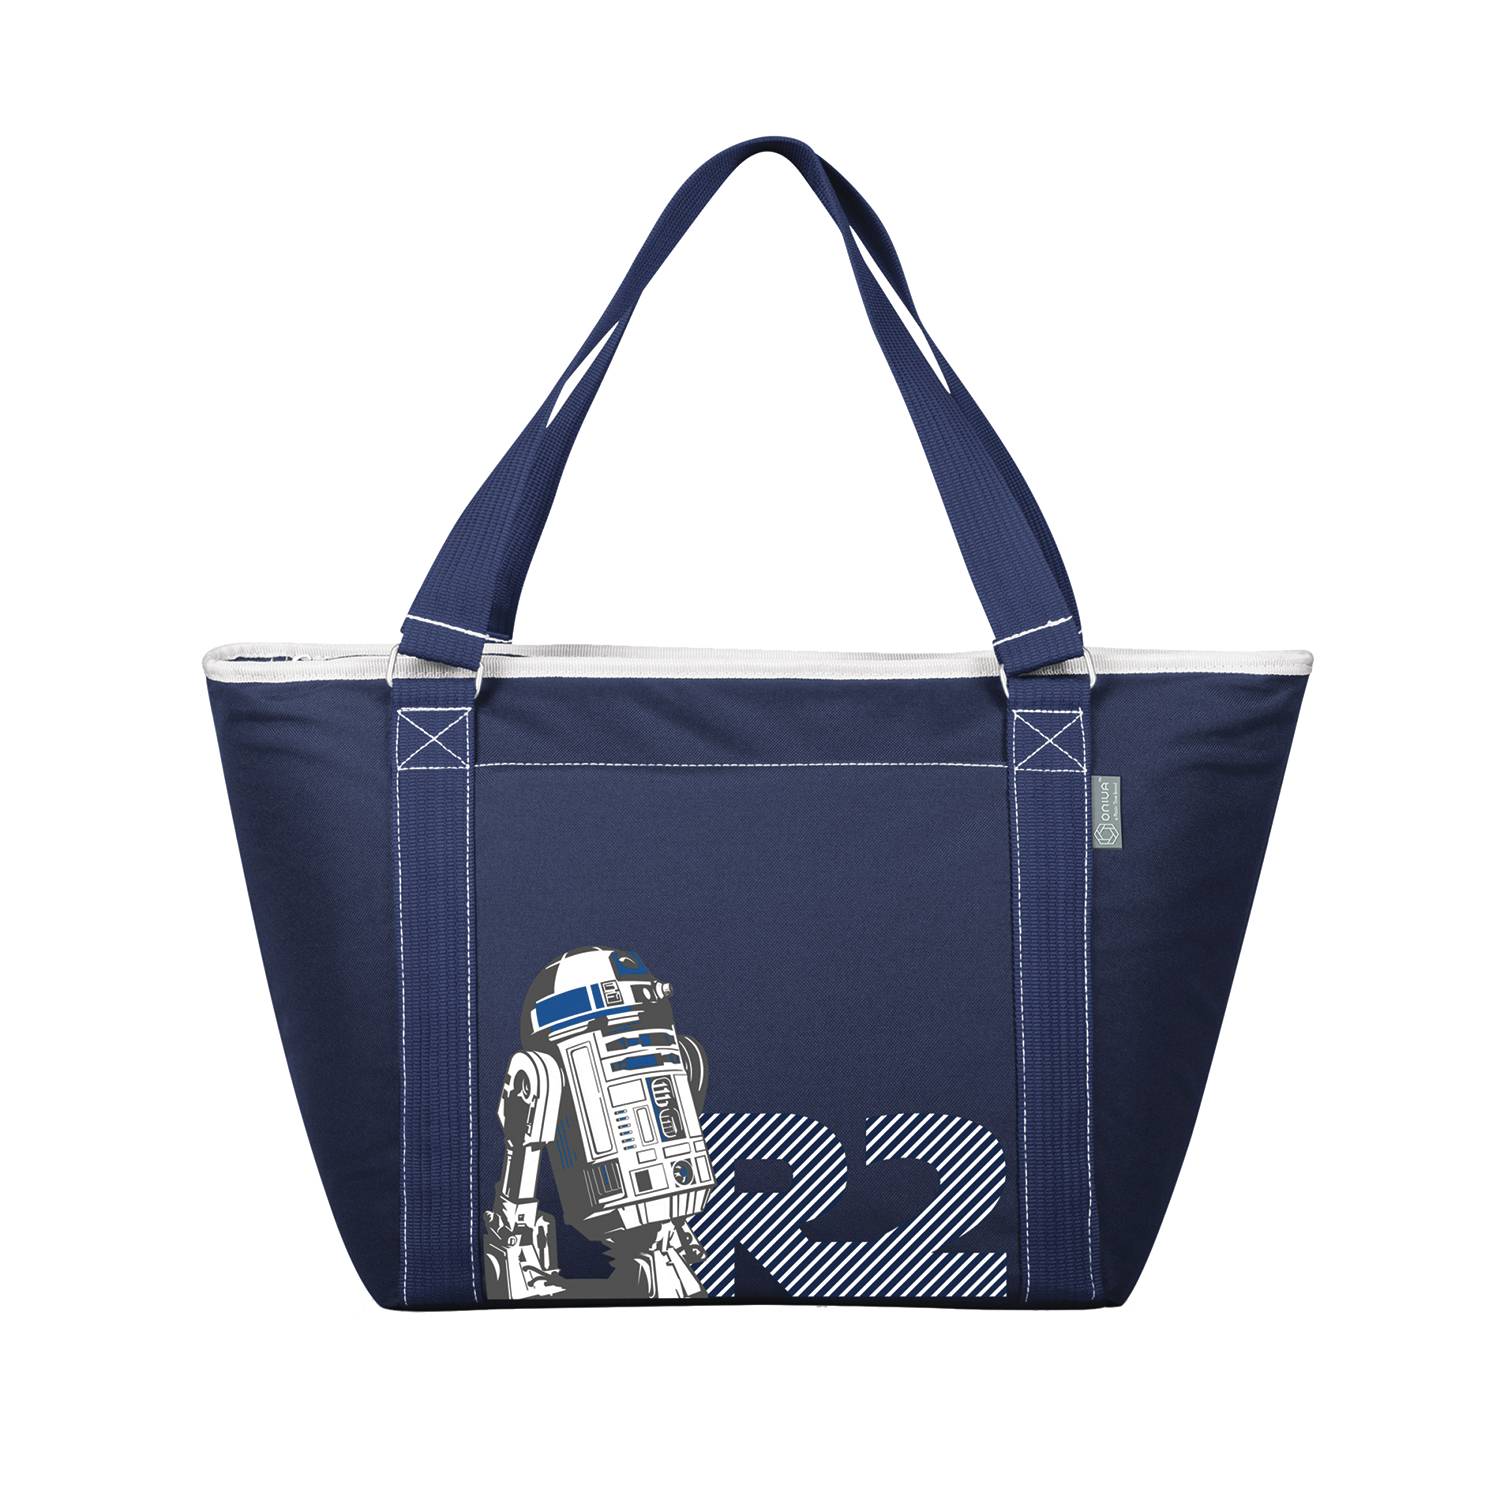 STAR WARS R2-D2 TOPANGA COOLER TOTE BAG